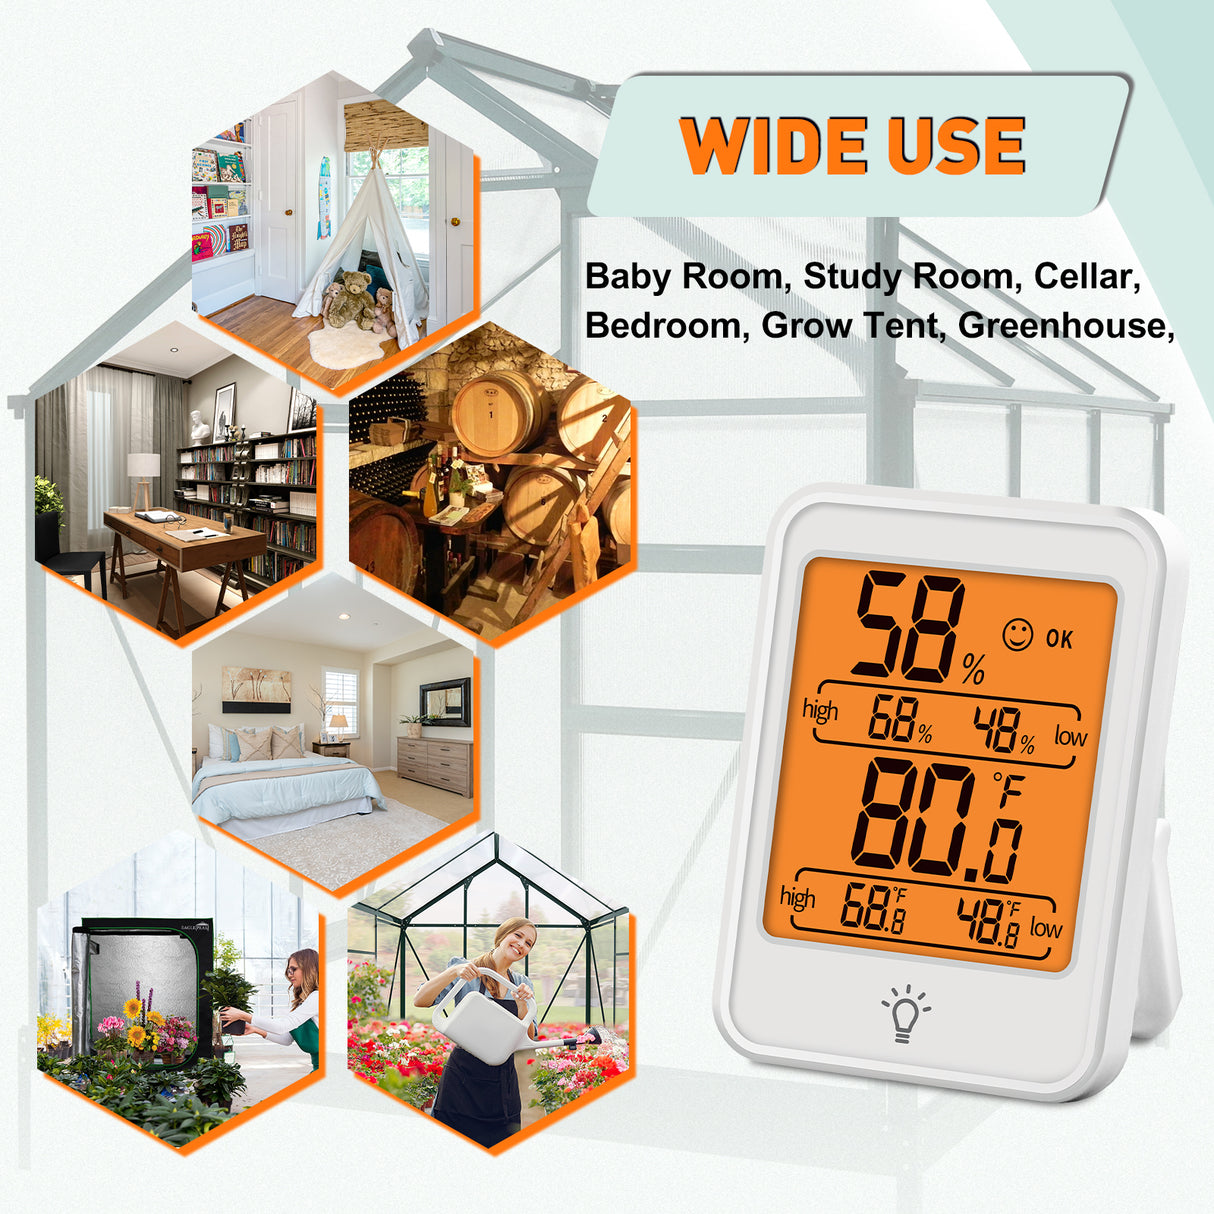 EAGLE PEAK Digital Hygrometer Thermometer Humidity Gauge with Backlight Display, Indoor Room Thermometer with Temperature Humidity Monitor for Nursery Room Greenhouse, White